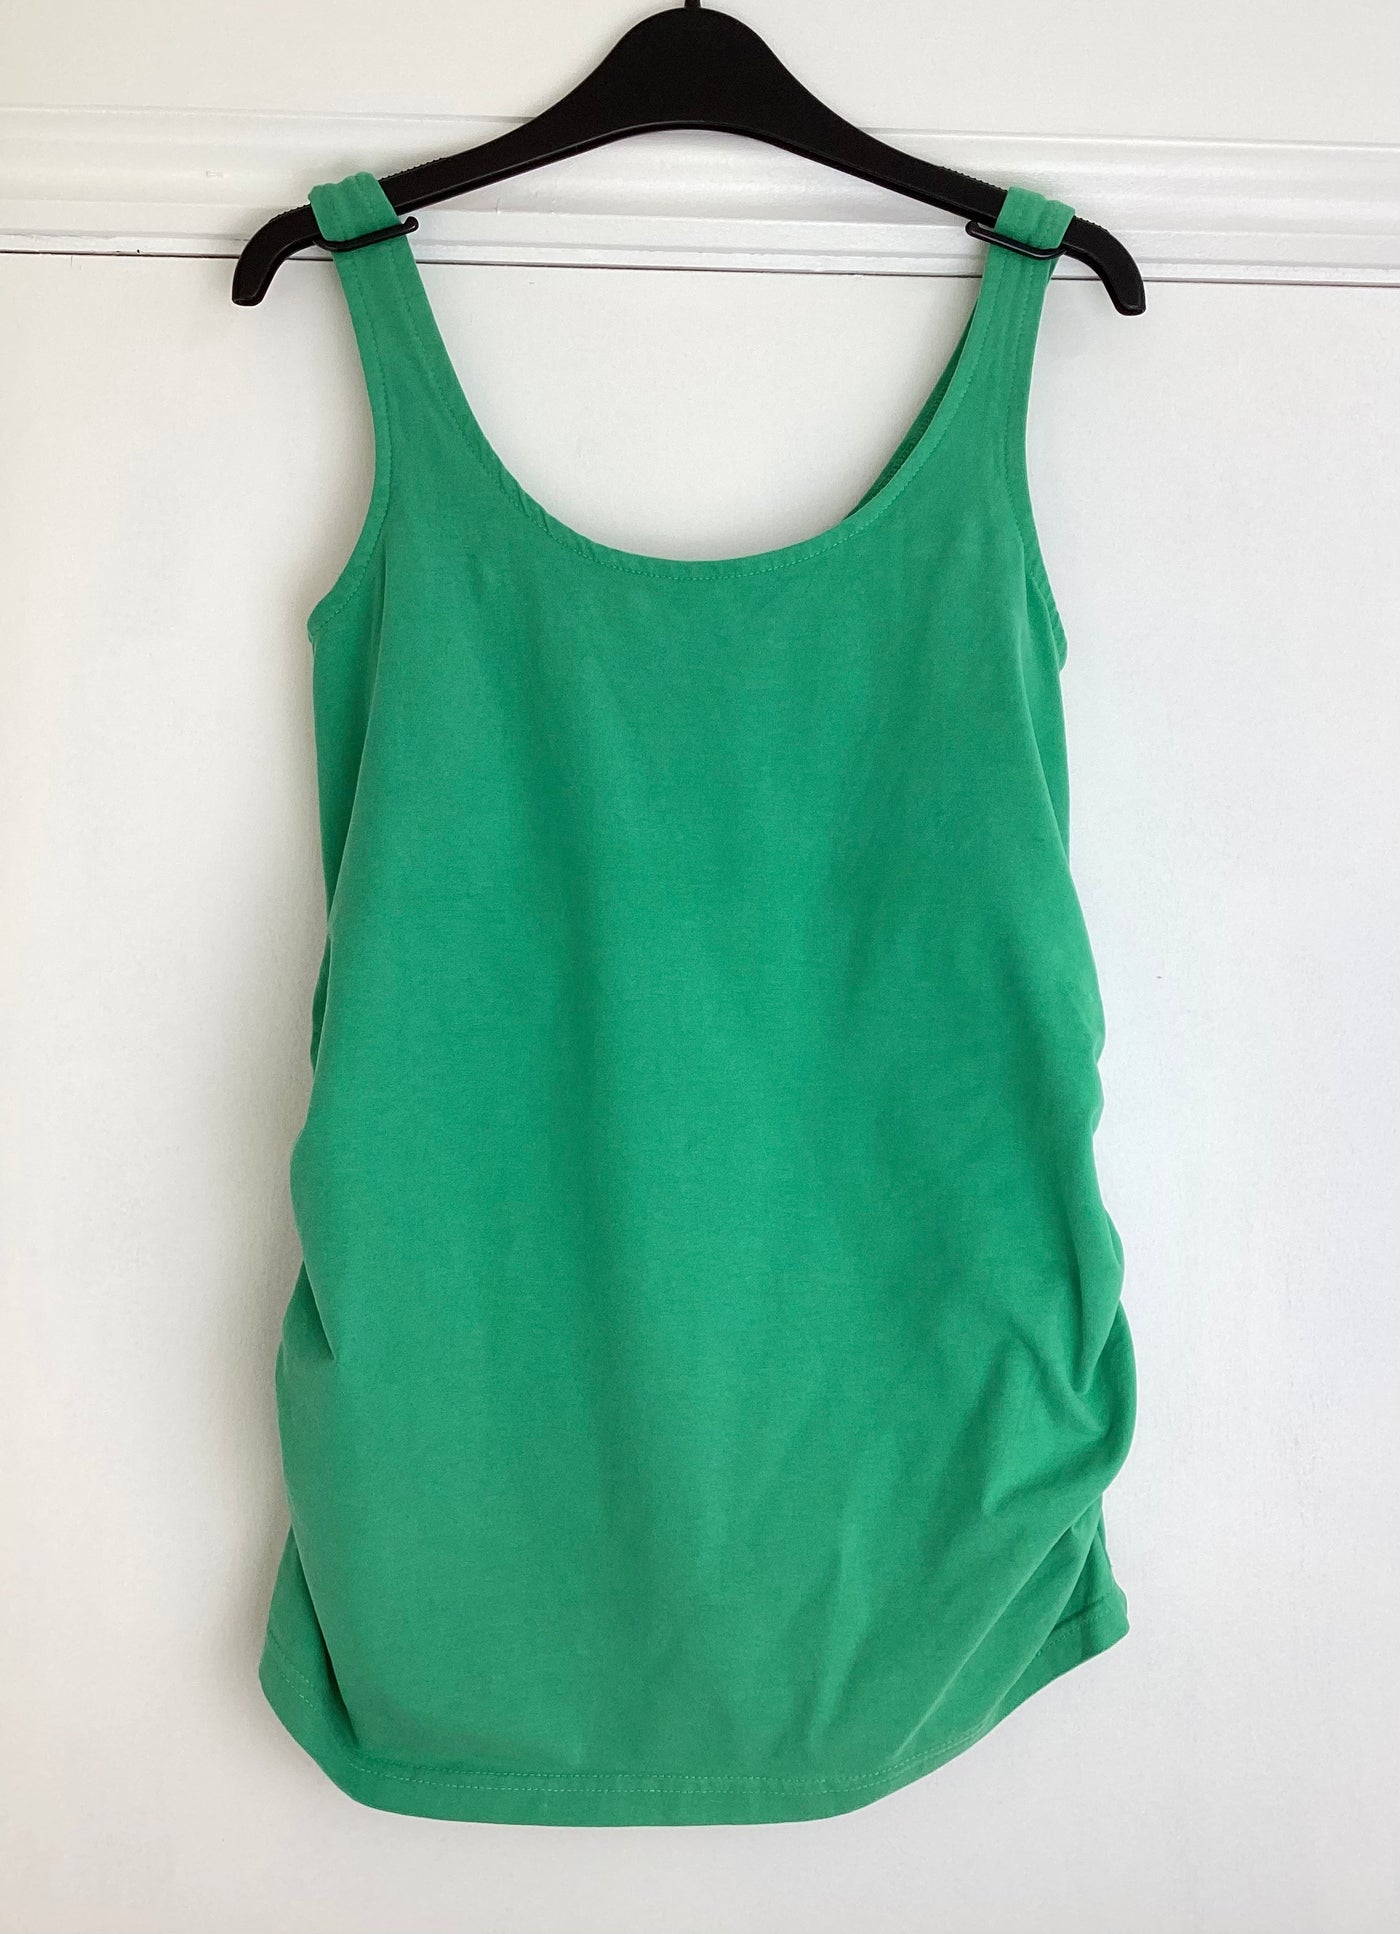 Jojo Maman Bebe green sleeveless top - Size XS (Approx UK 6/8)